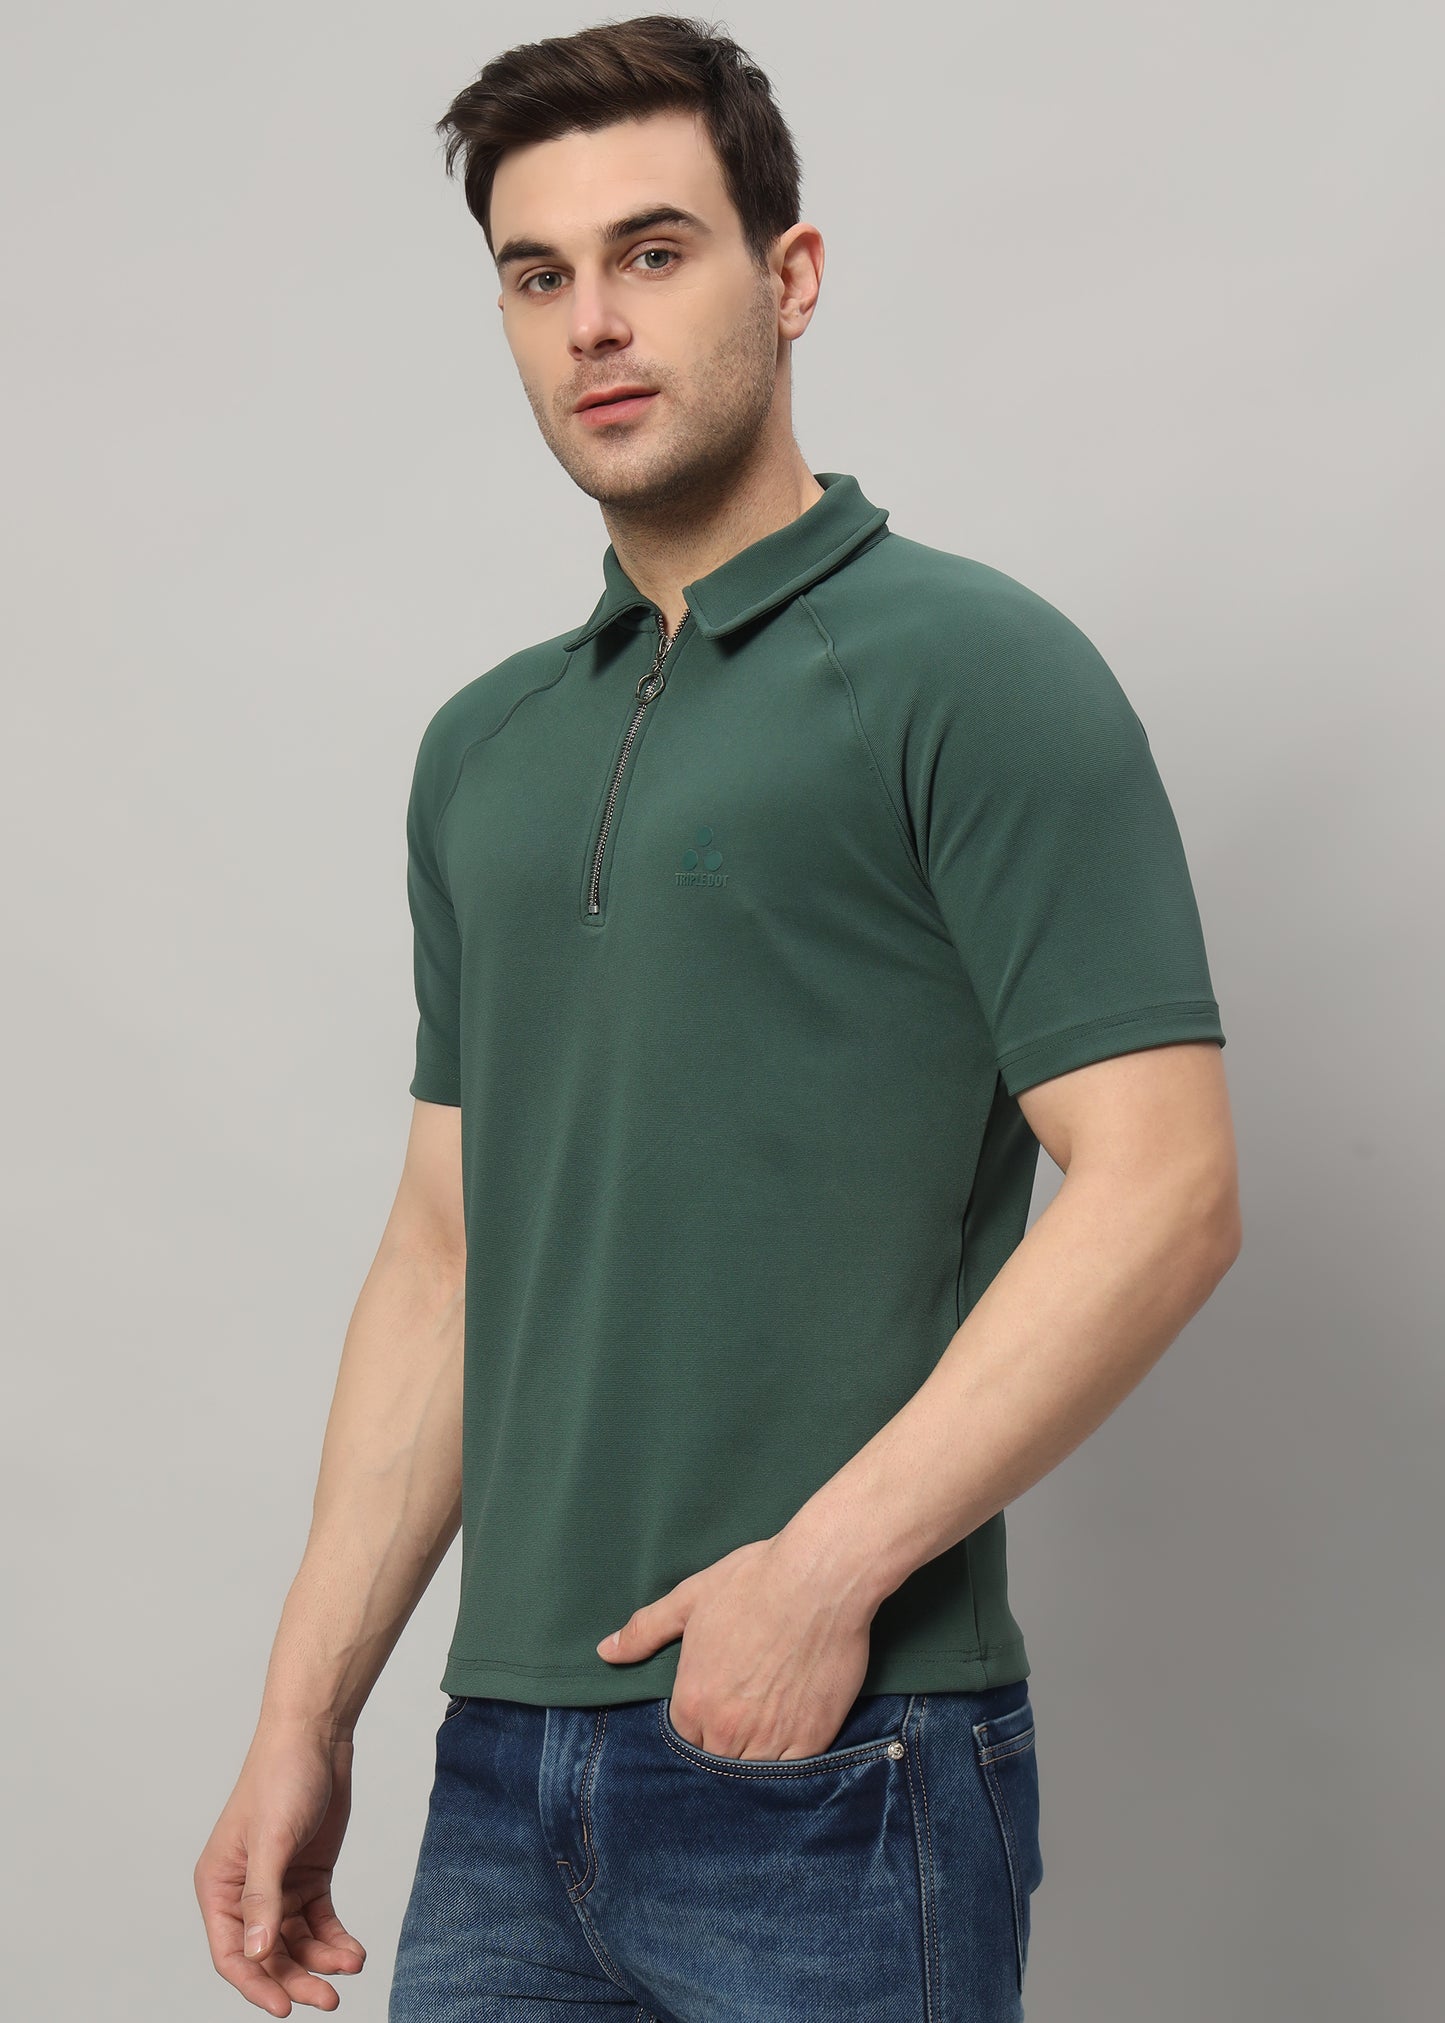 Olive Green Zipper Polo T Shirt